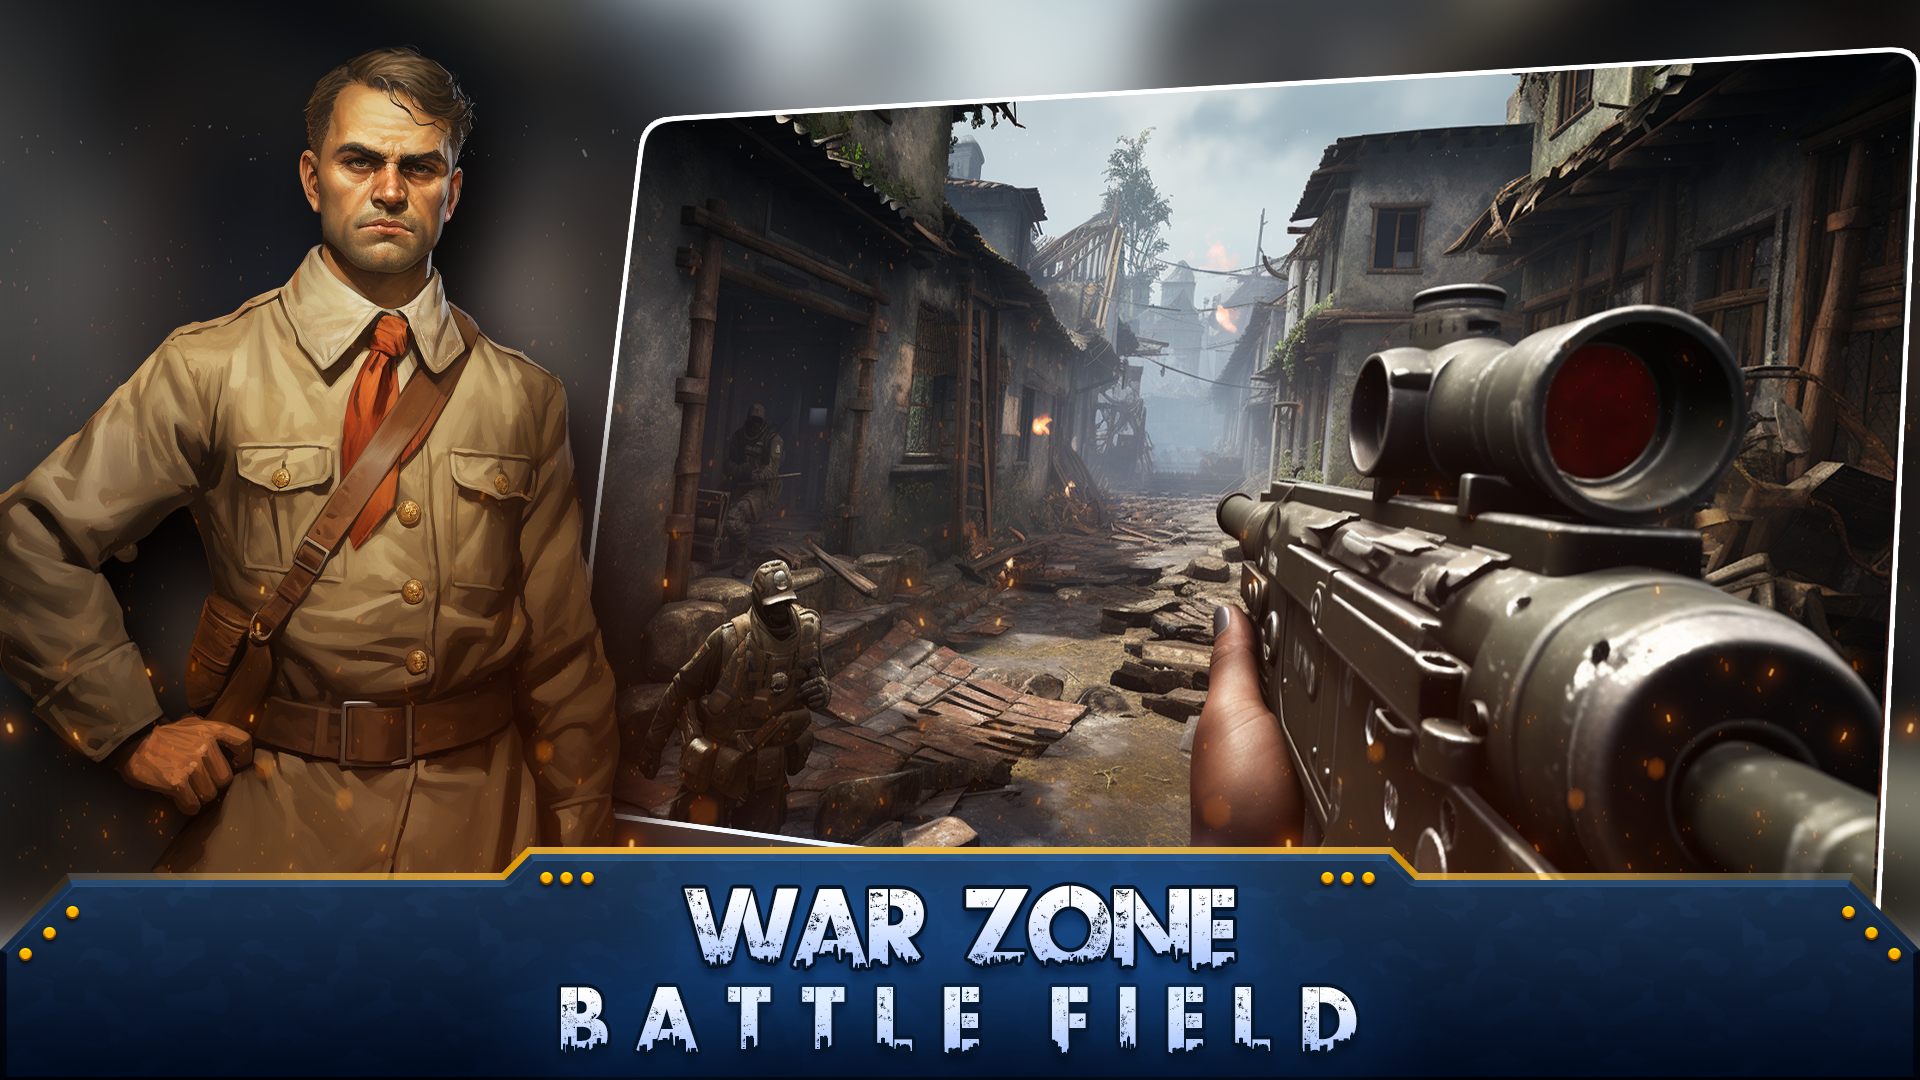 War Zone Soldier: Battle Royale Shooter